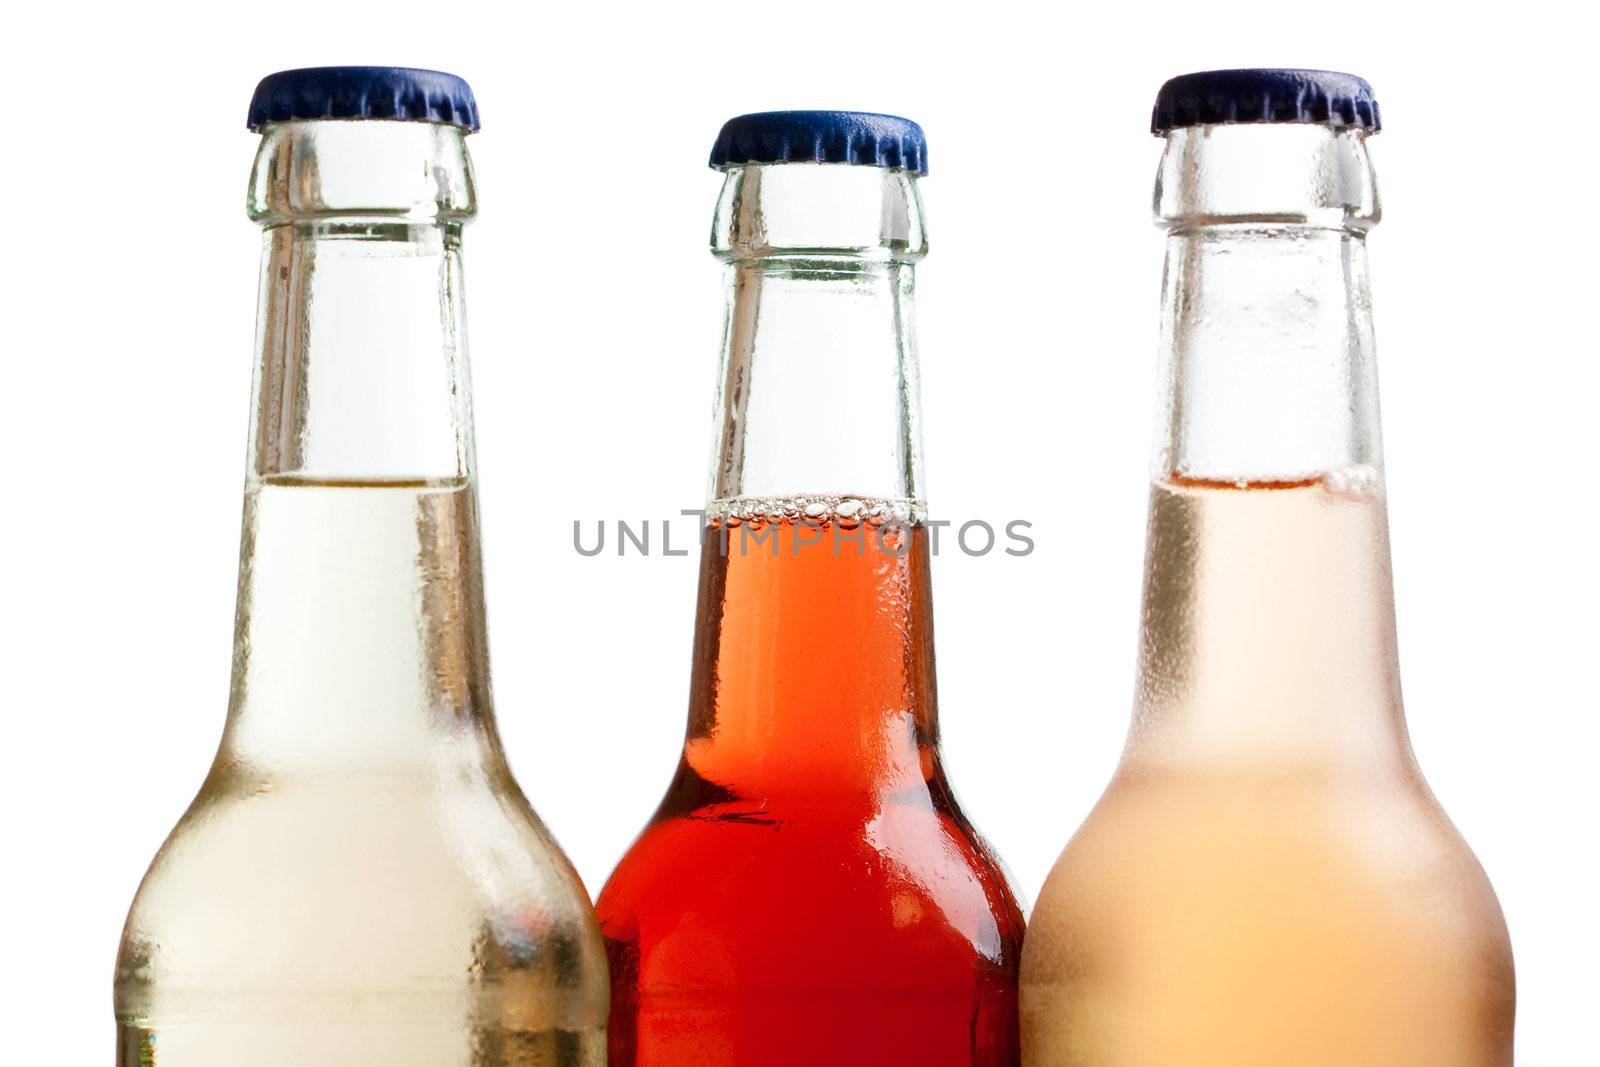 Three cool bottles of fresh beverages